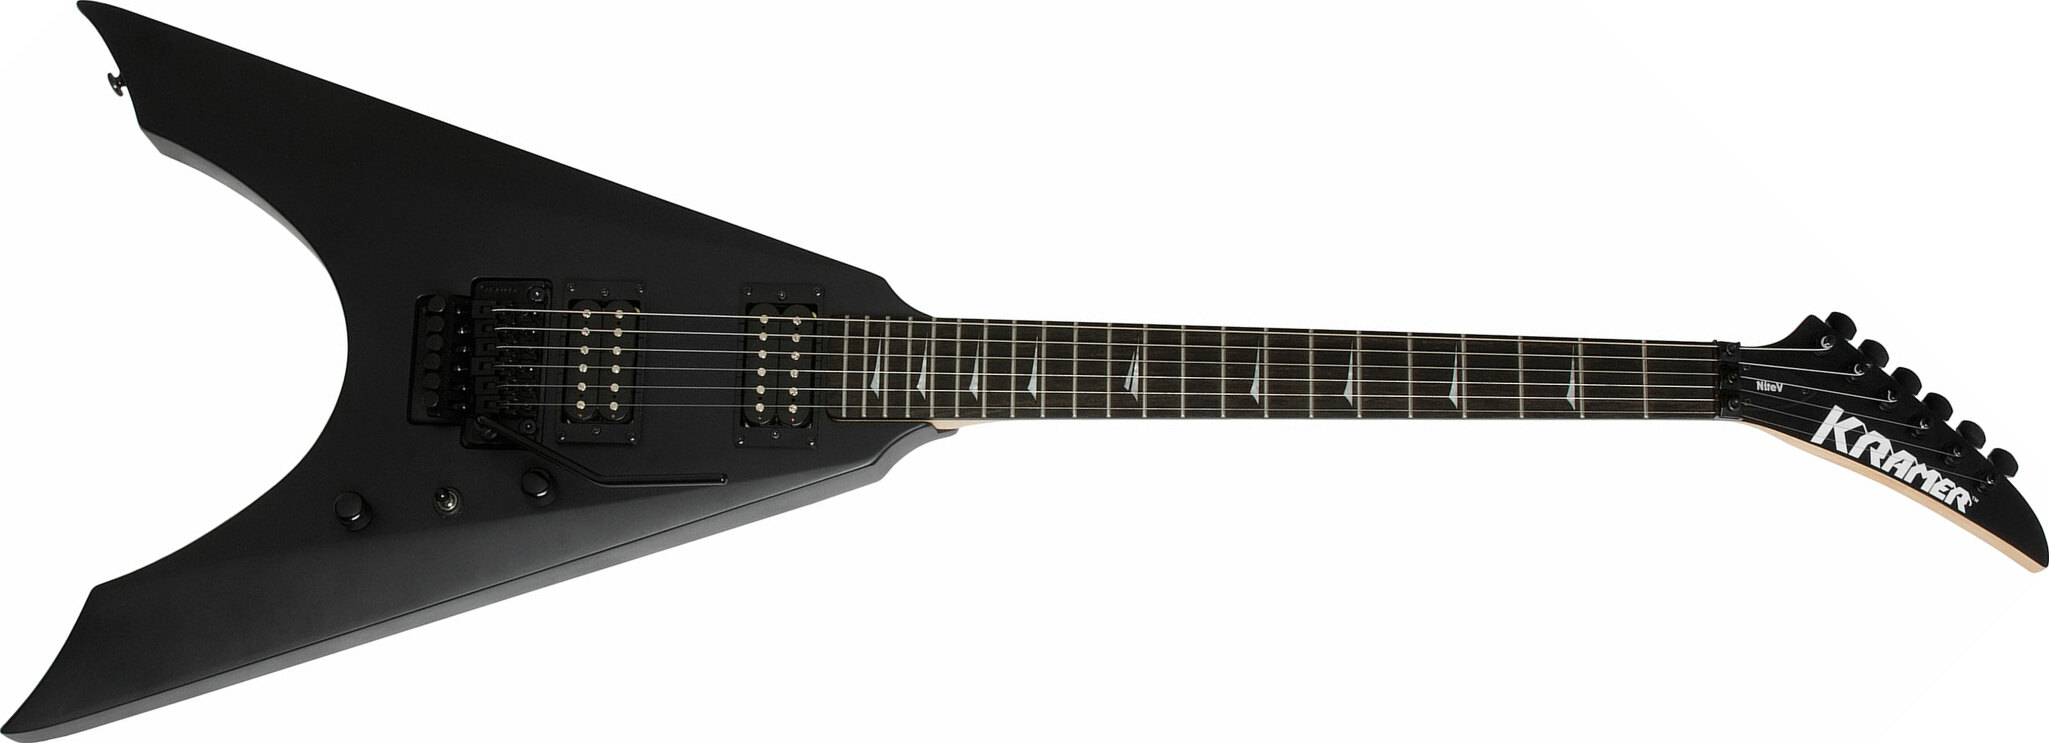 Kramer Nite-v 2h Fr Rw - Black - Metal electric guitar - Main picture